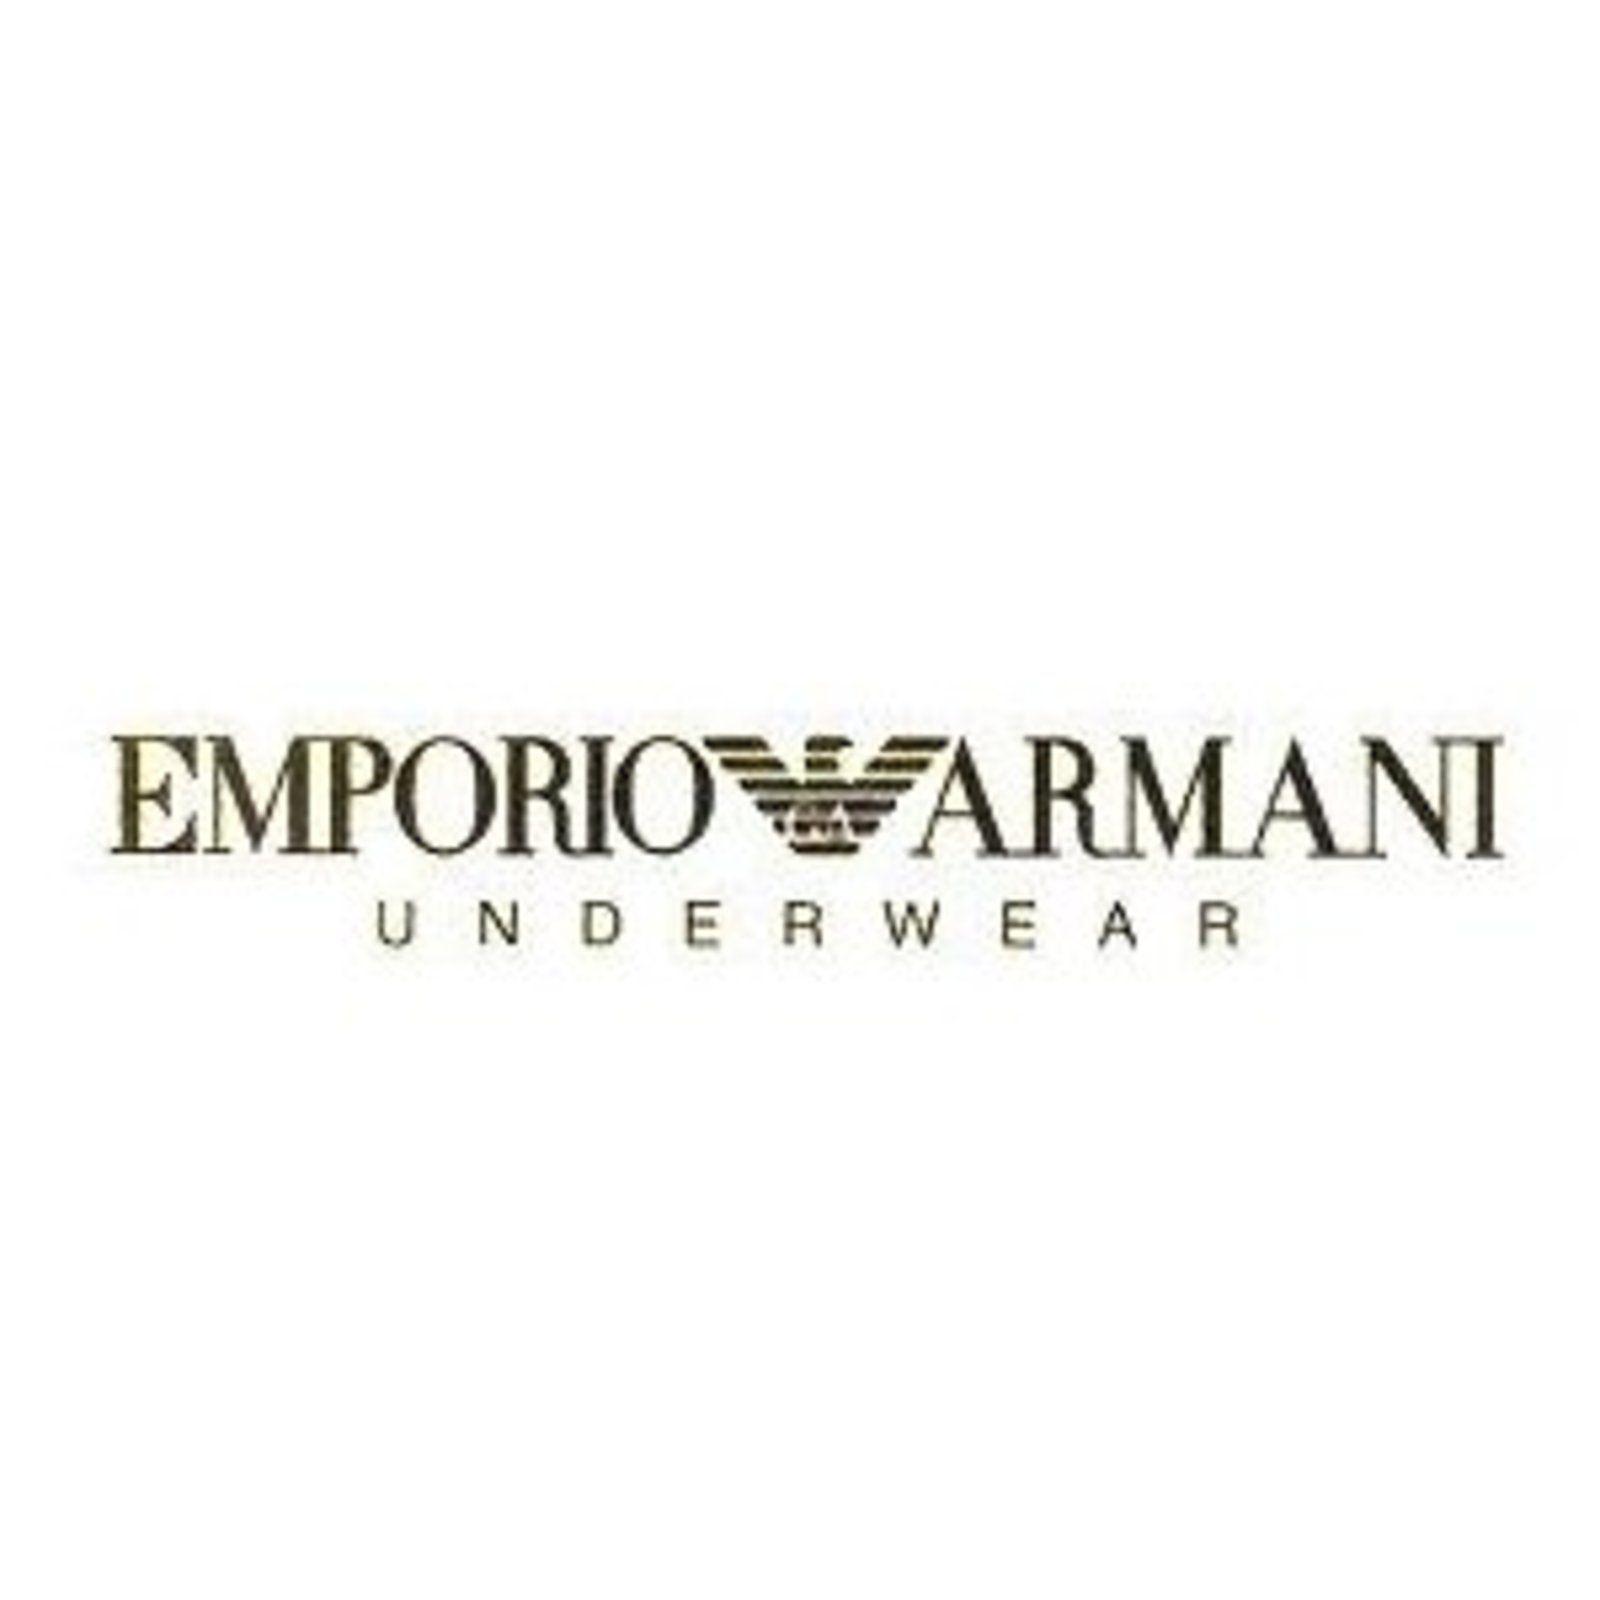 Emporio Armani Logo - Under Wear Emporio Armani boxer shorts at Togged Clothing